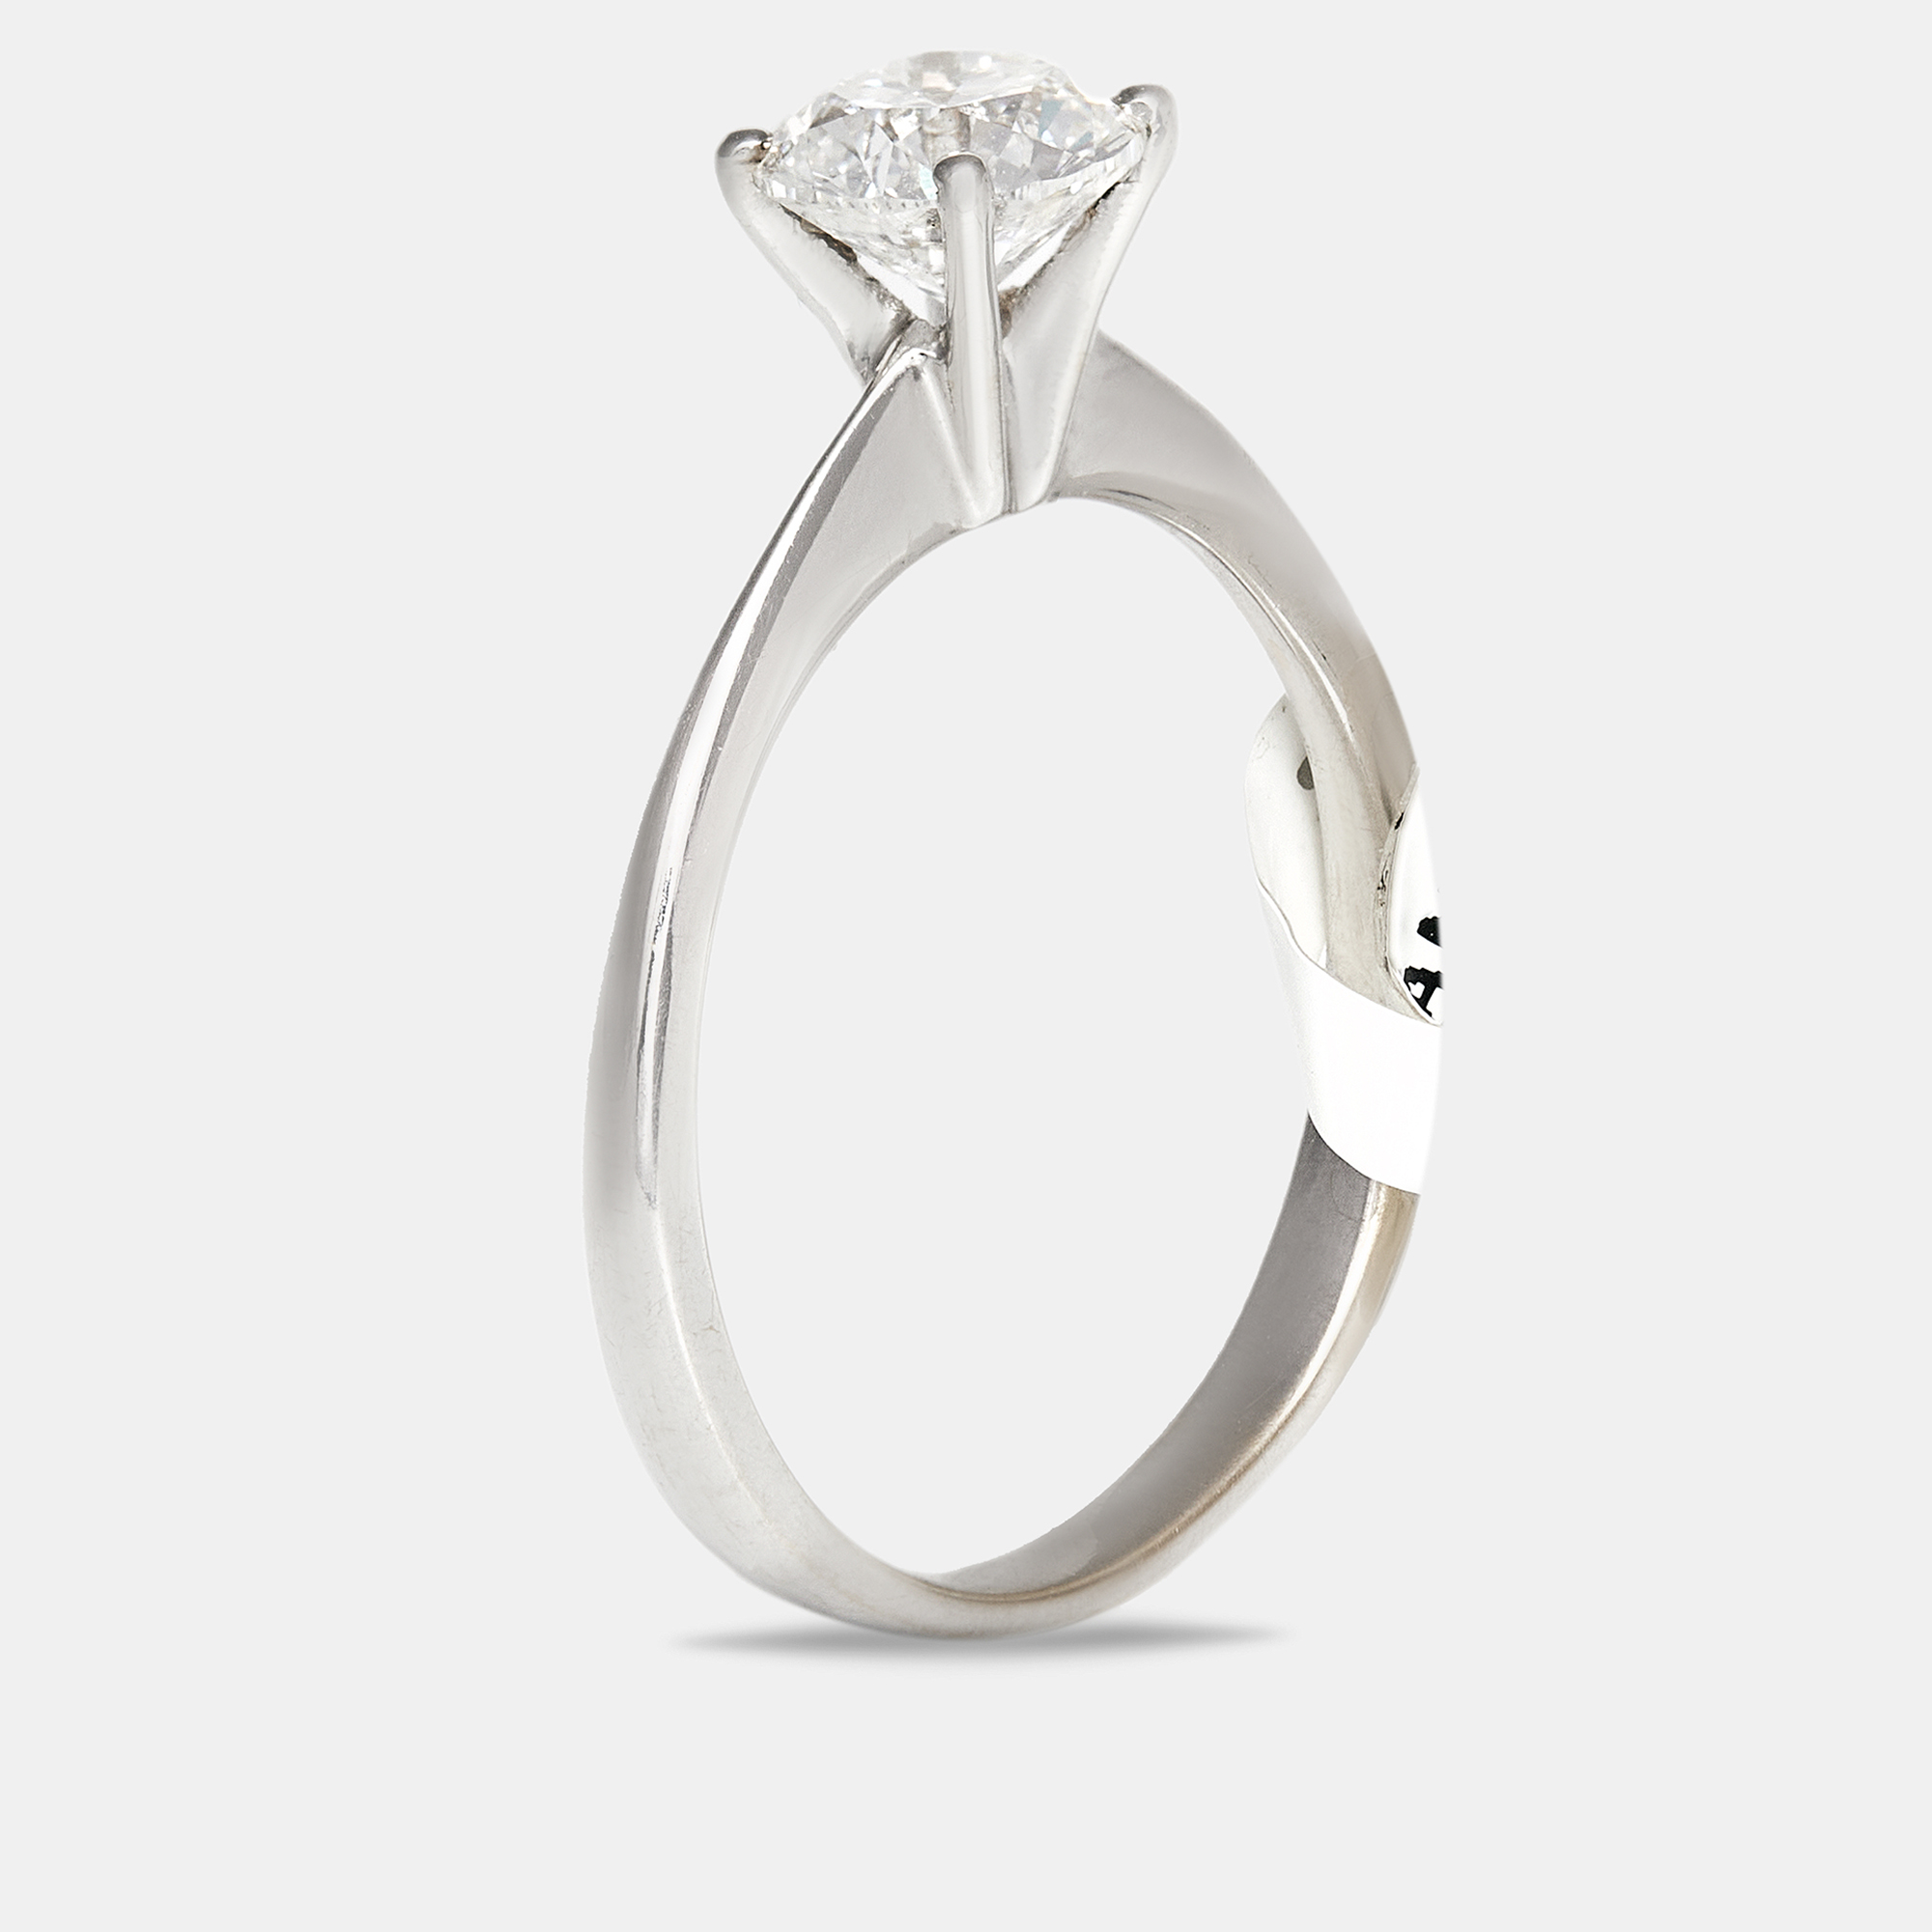 The diamond edit solitare diamond 1.01 ct 18k white gold wedding ring size 55